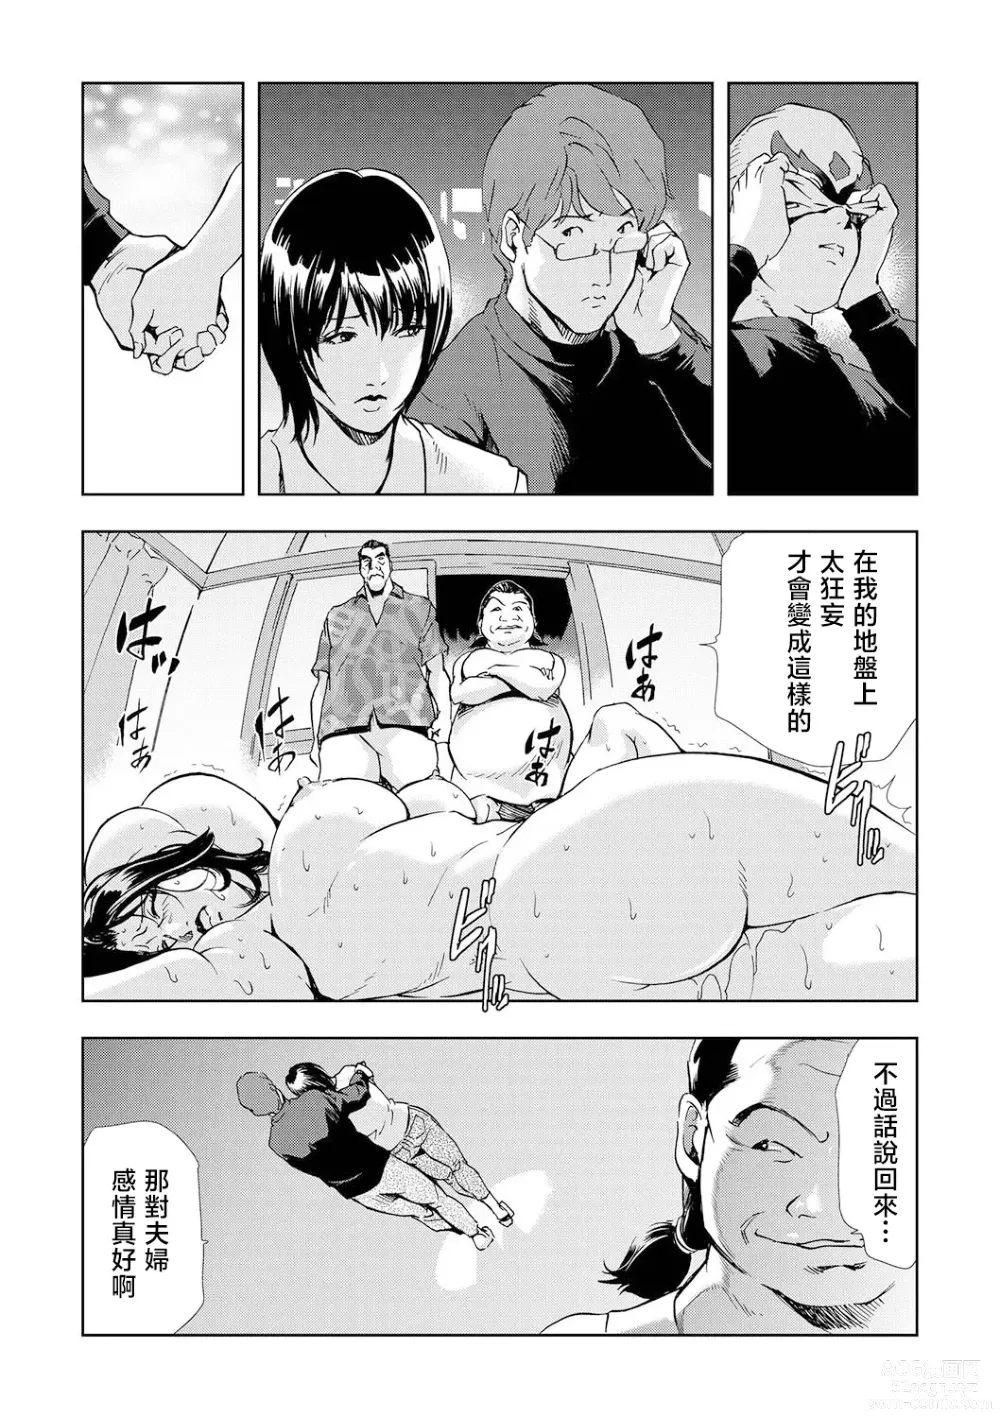 Page 30 of manga Netorare Vol.04